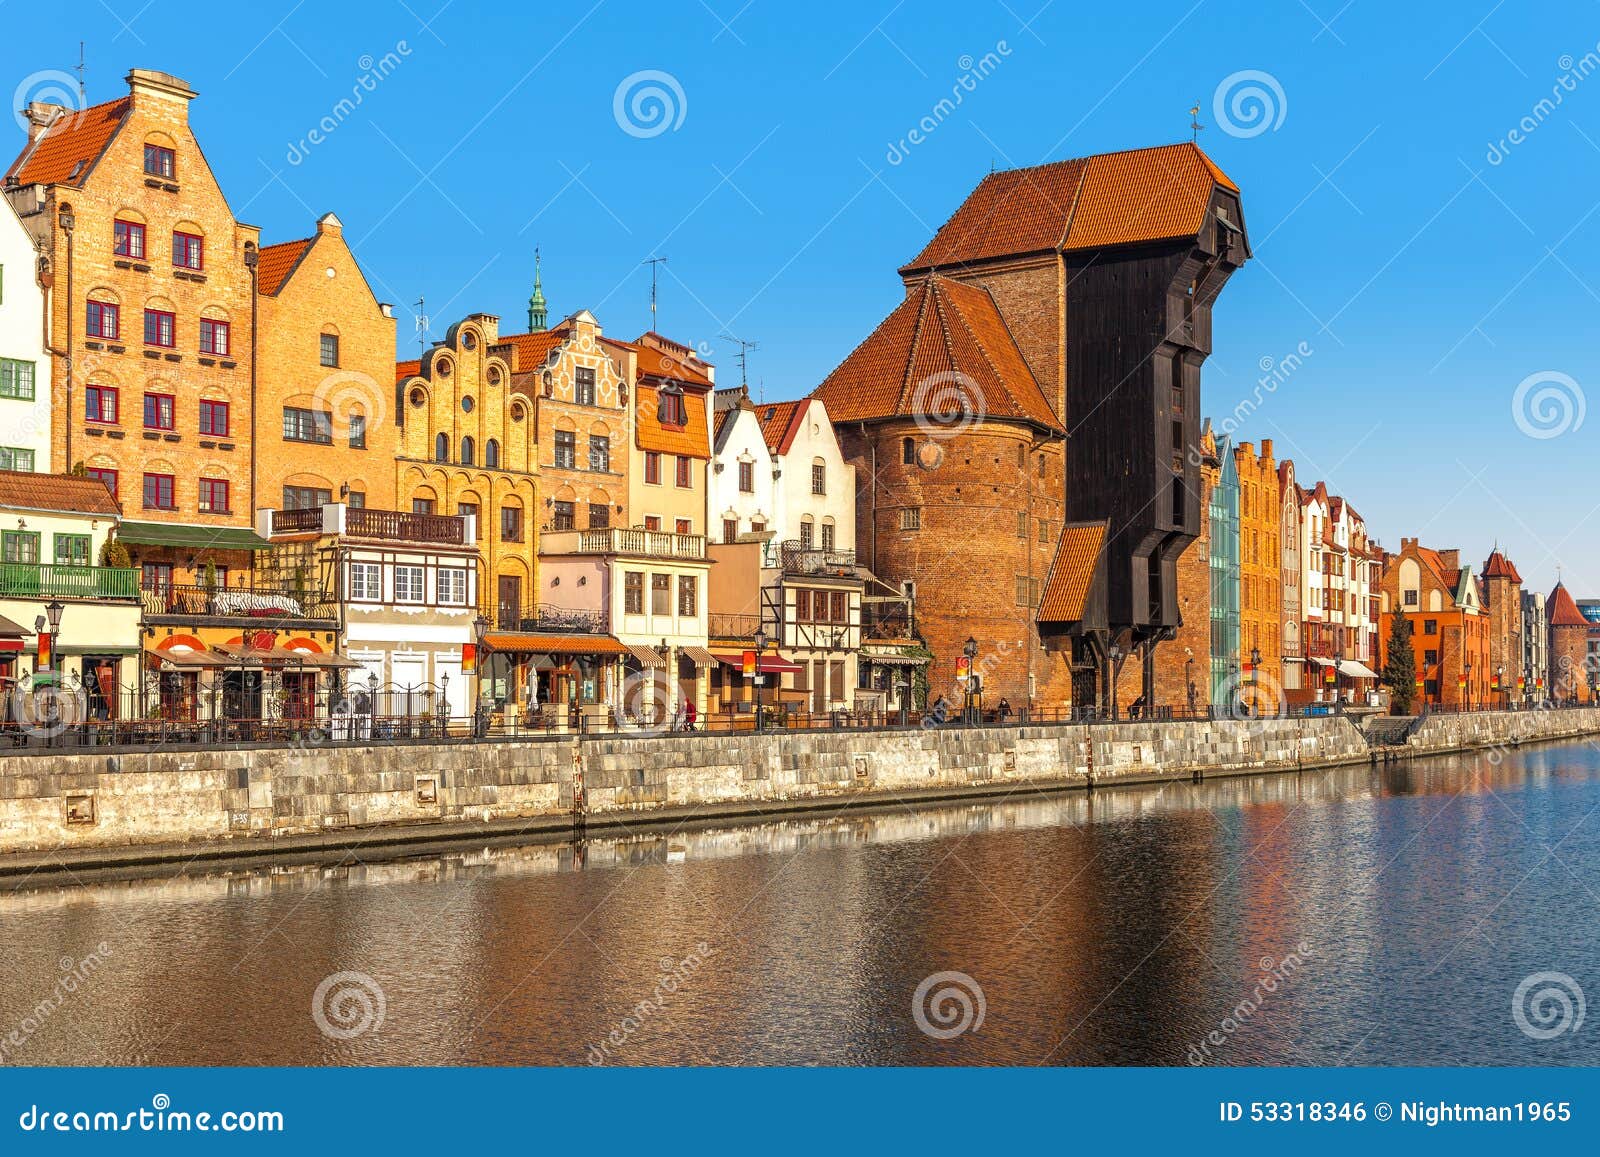 old town in gdansk